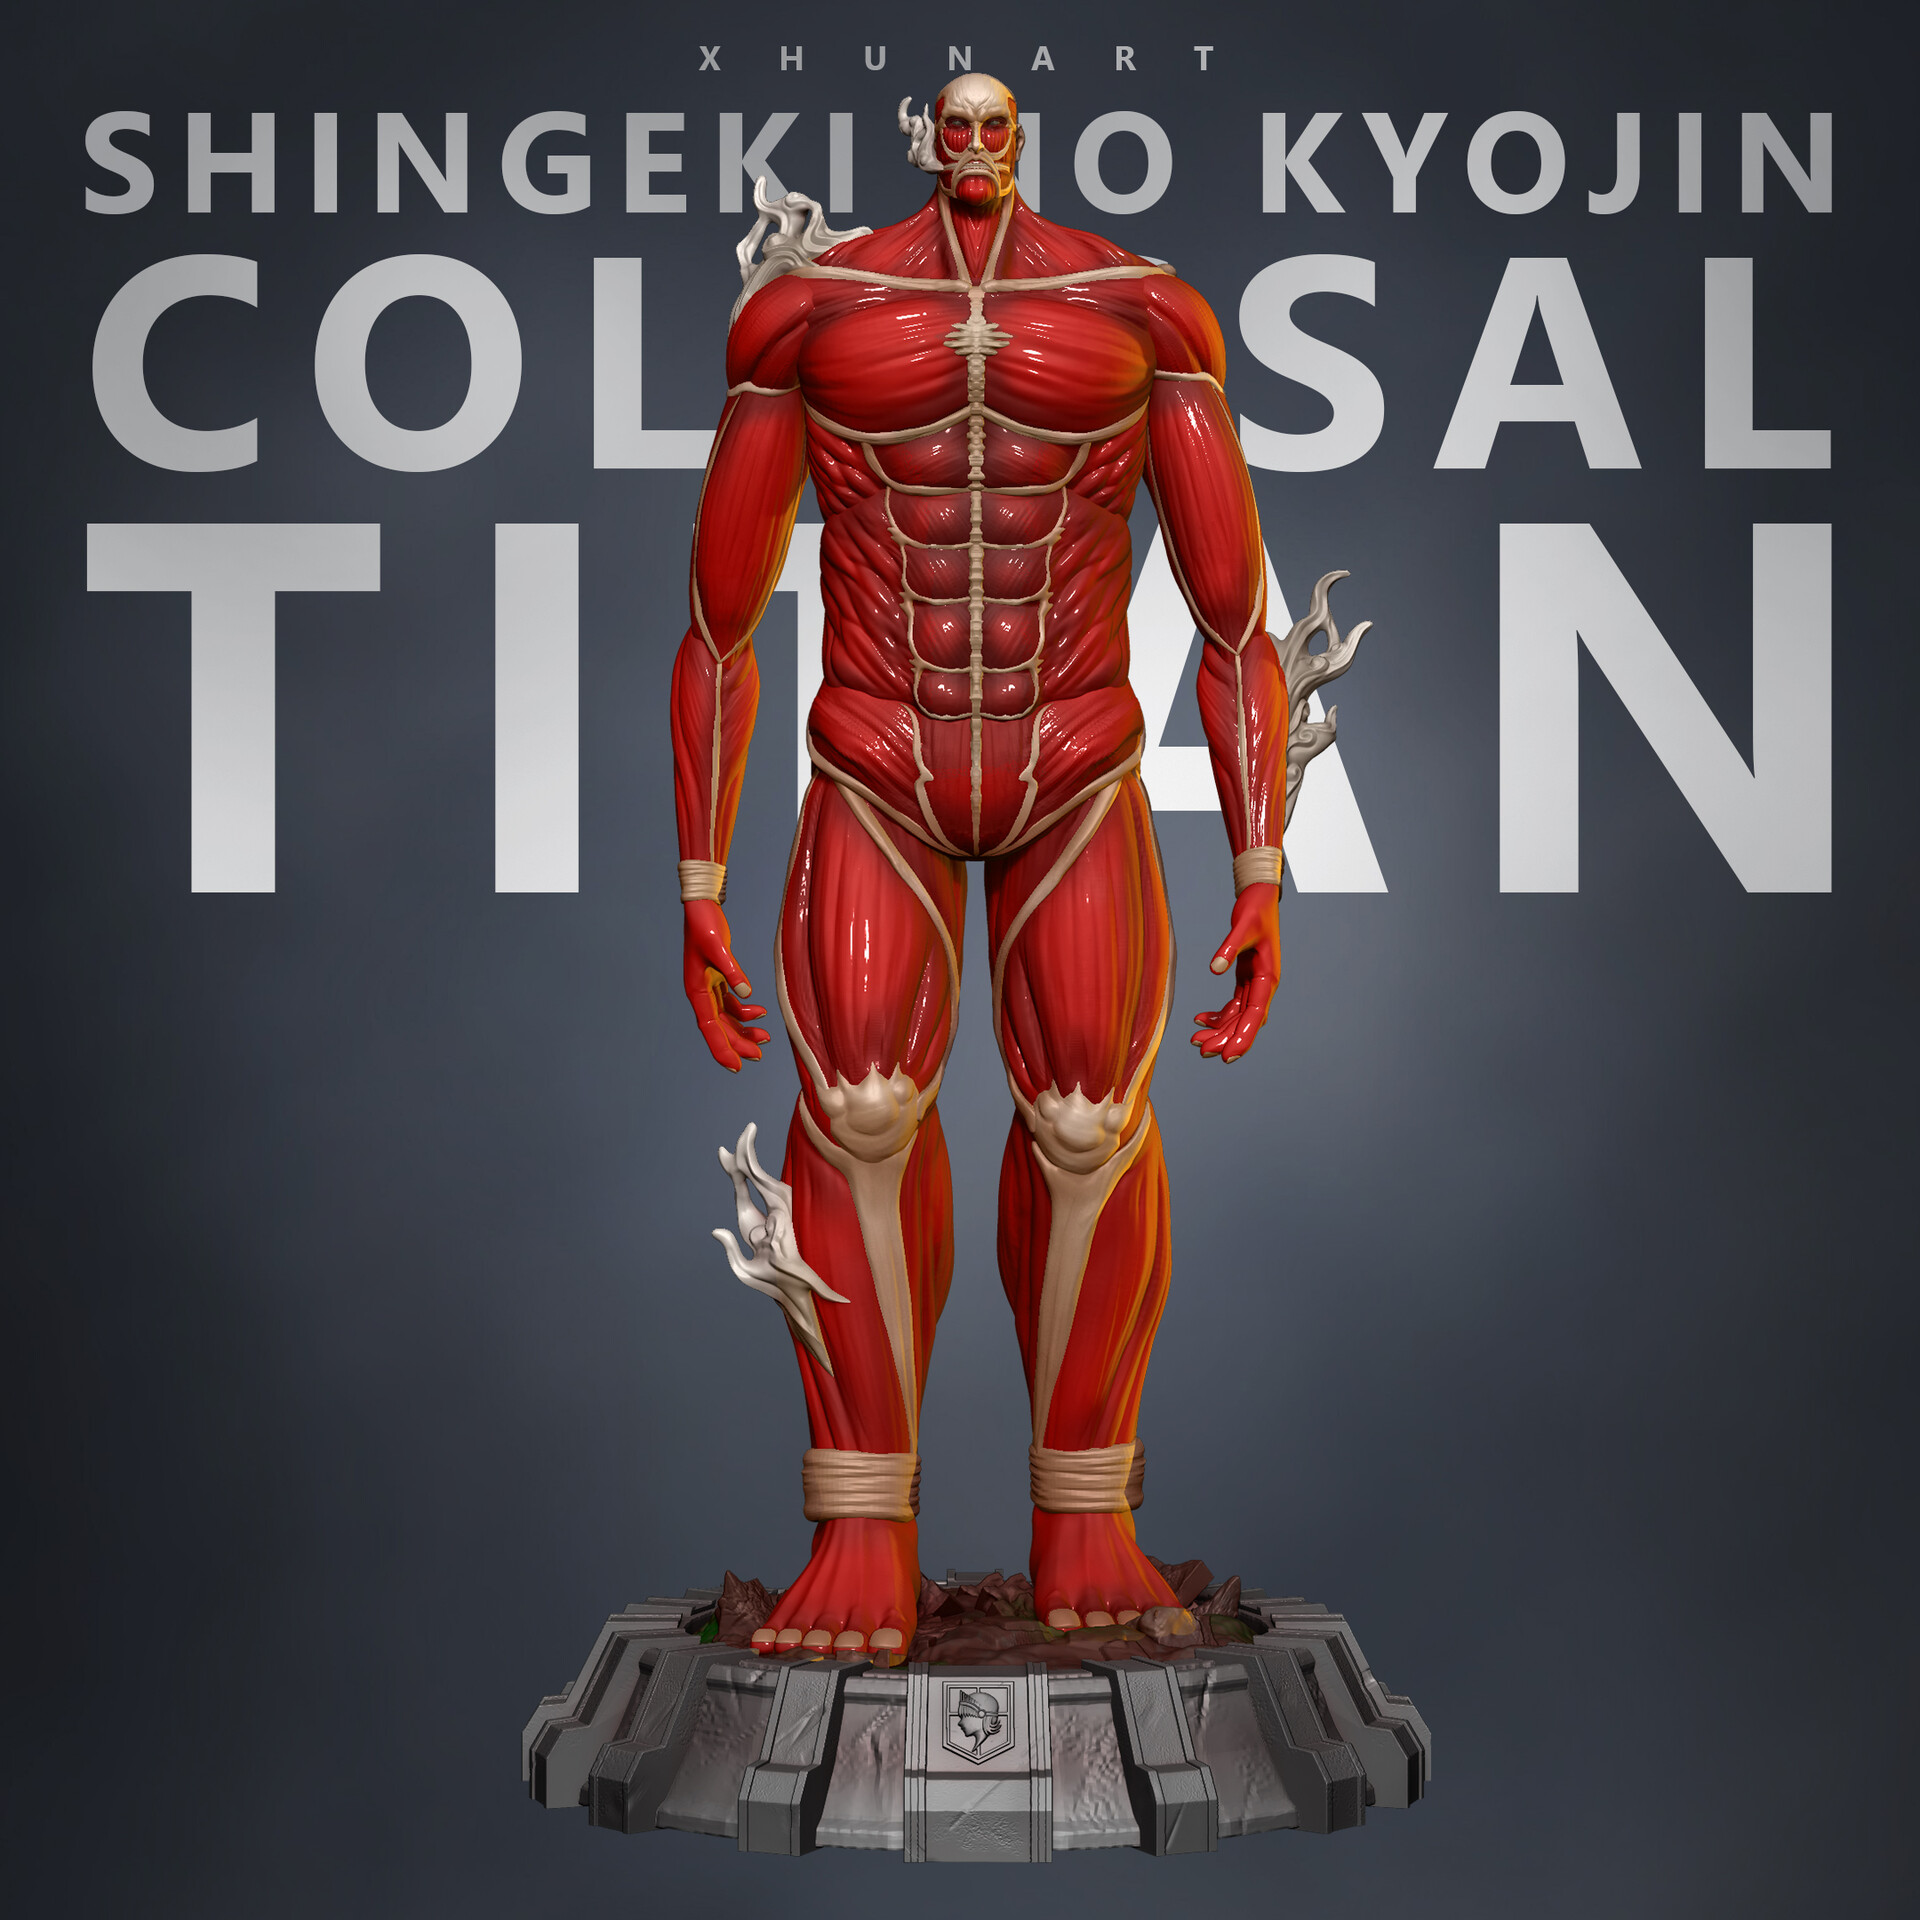 Colossal titan